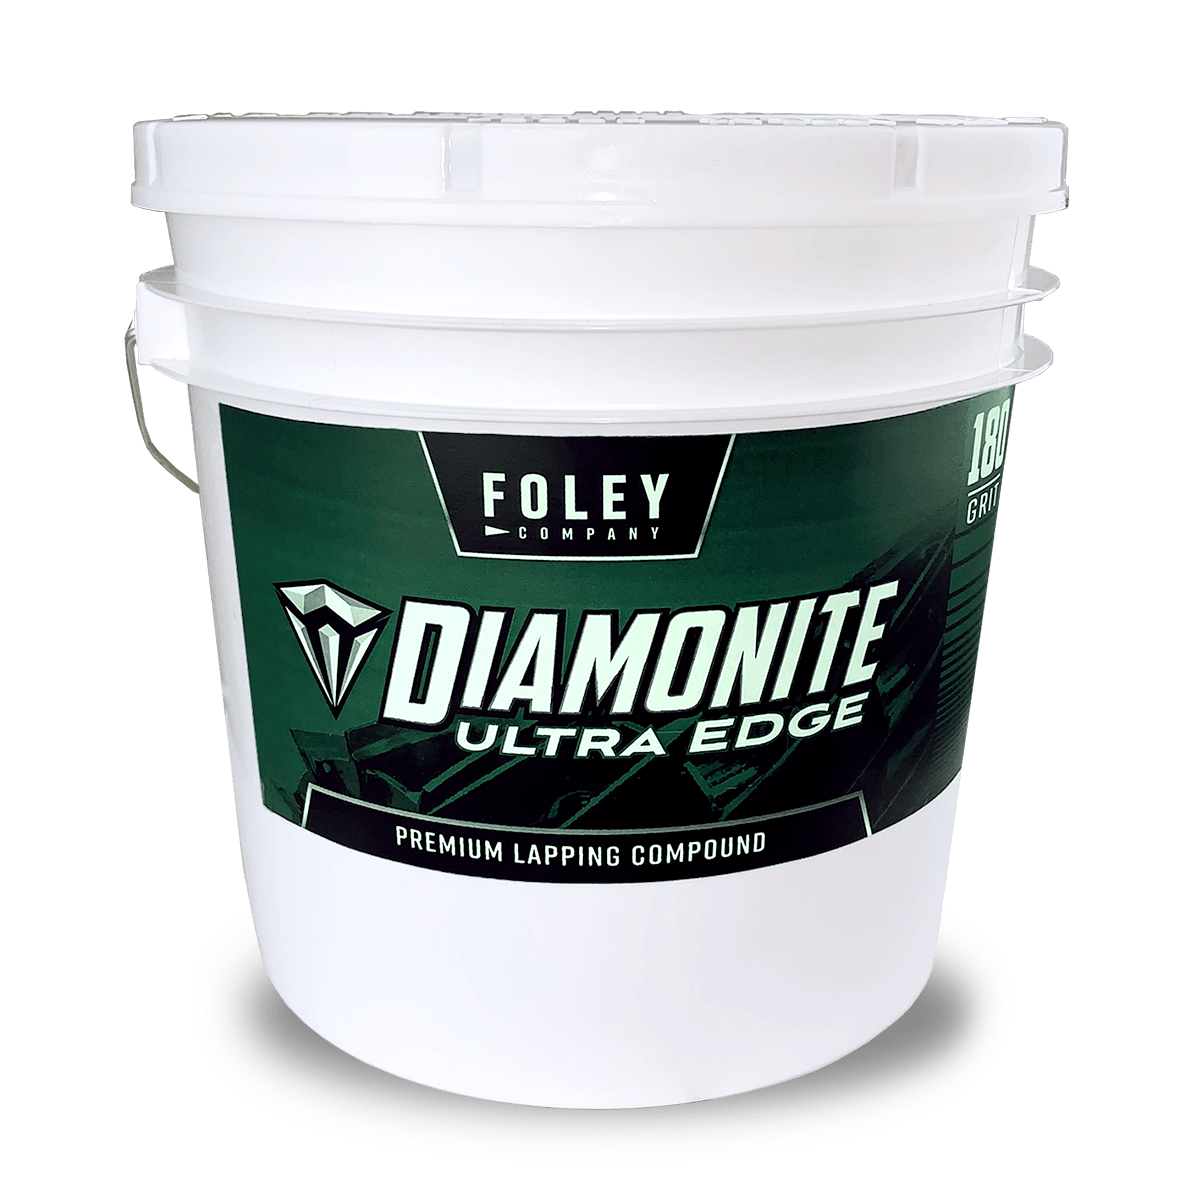 Foley Diamonite Ultra Edge Premium Lapping Compound 180 Grit